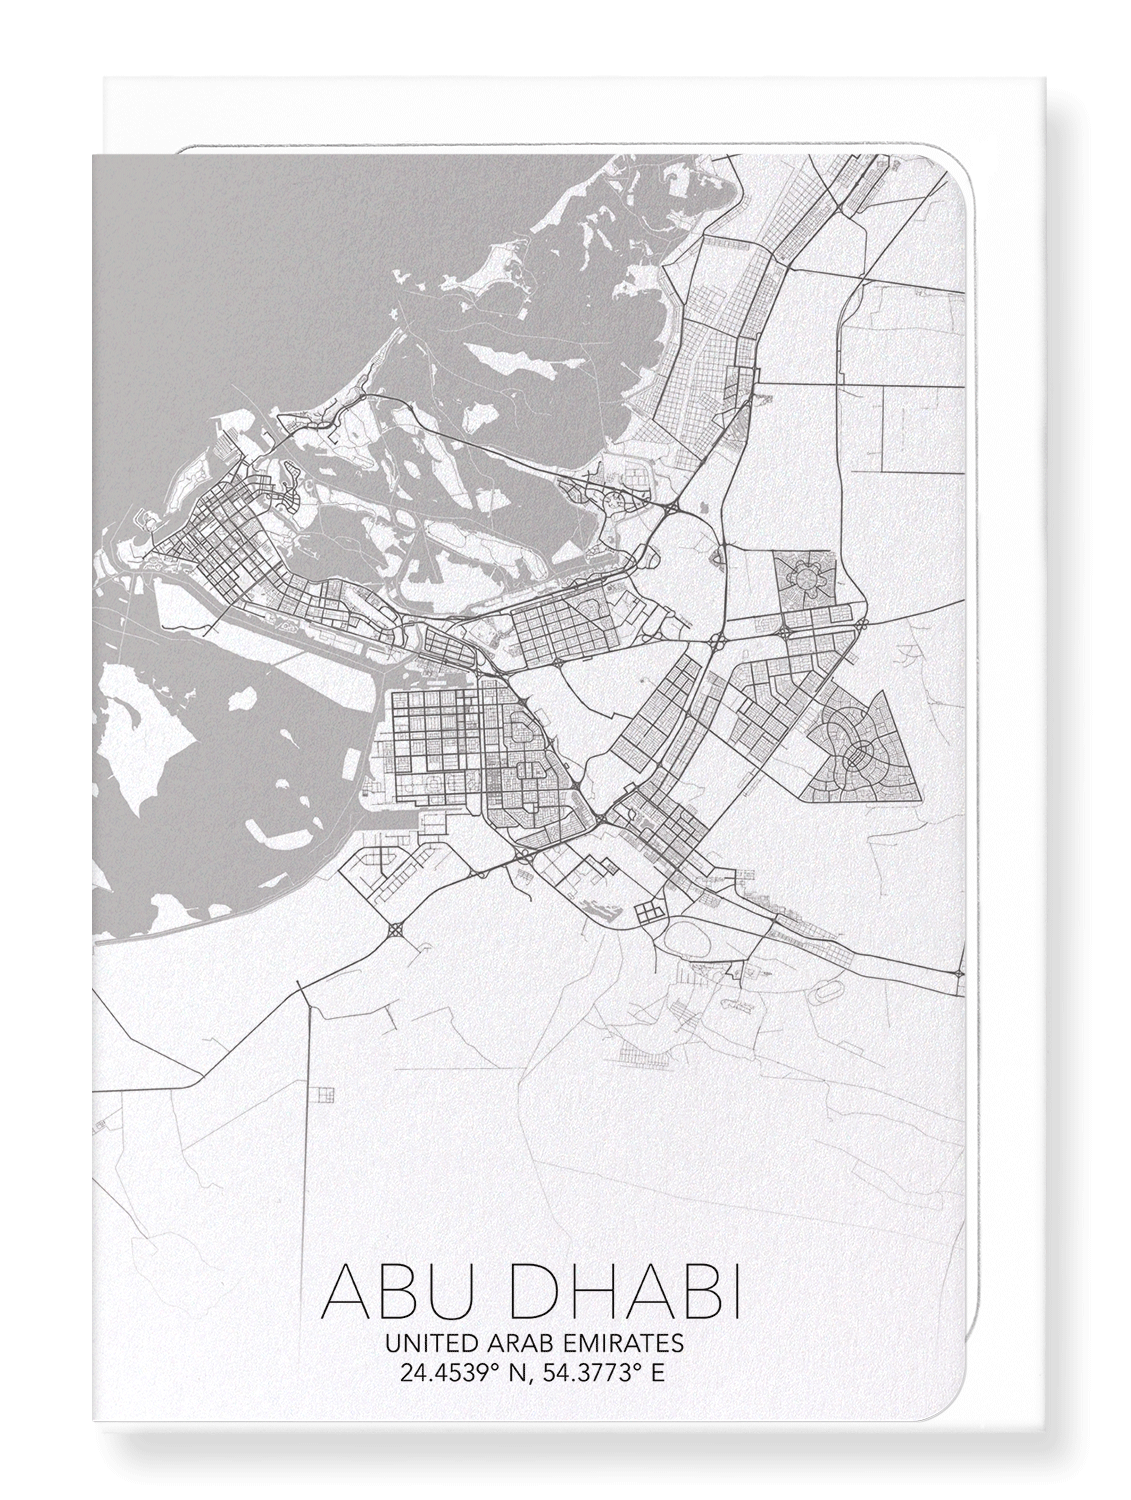 ABU DHABI FULL: Map Full Greeting Card